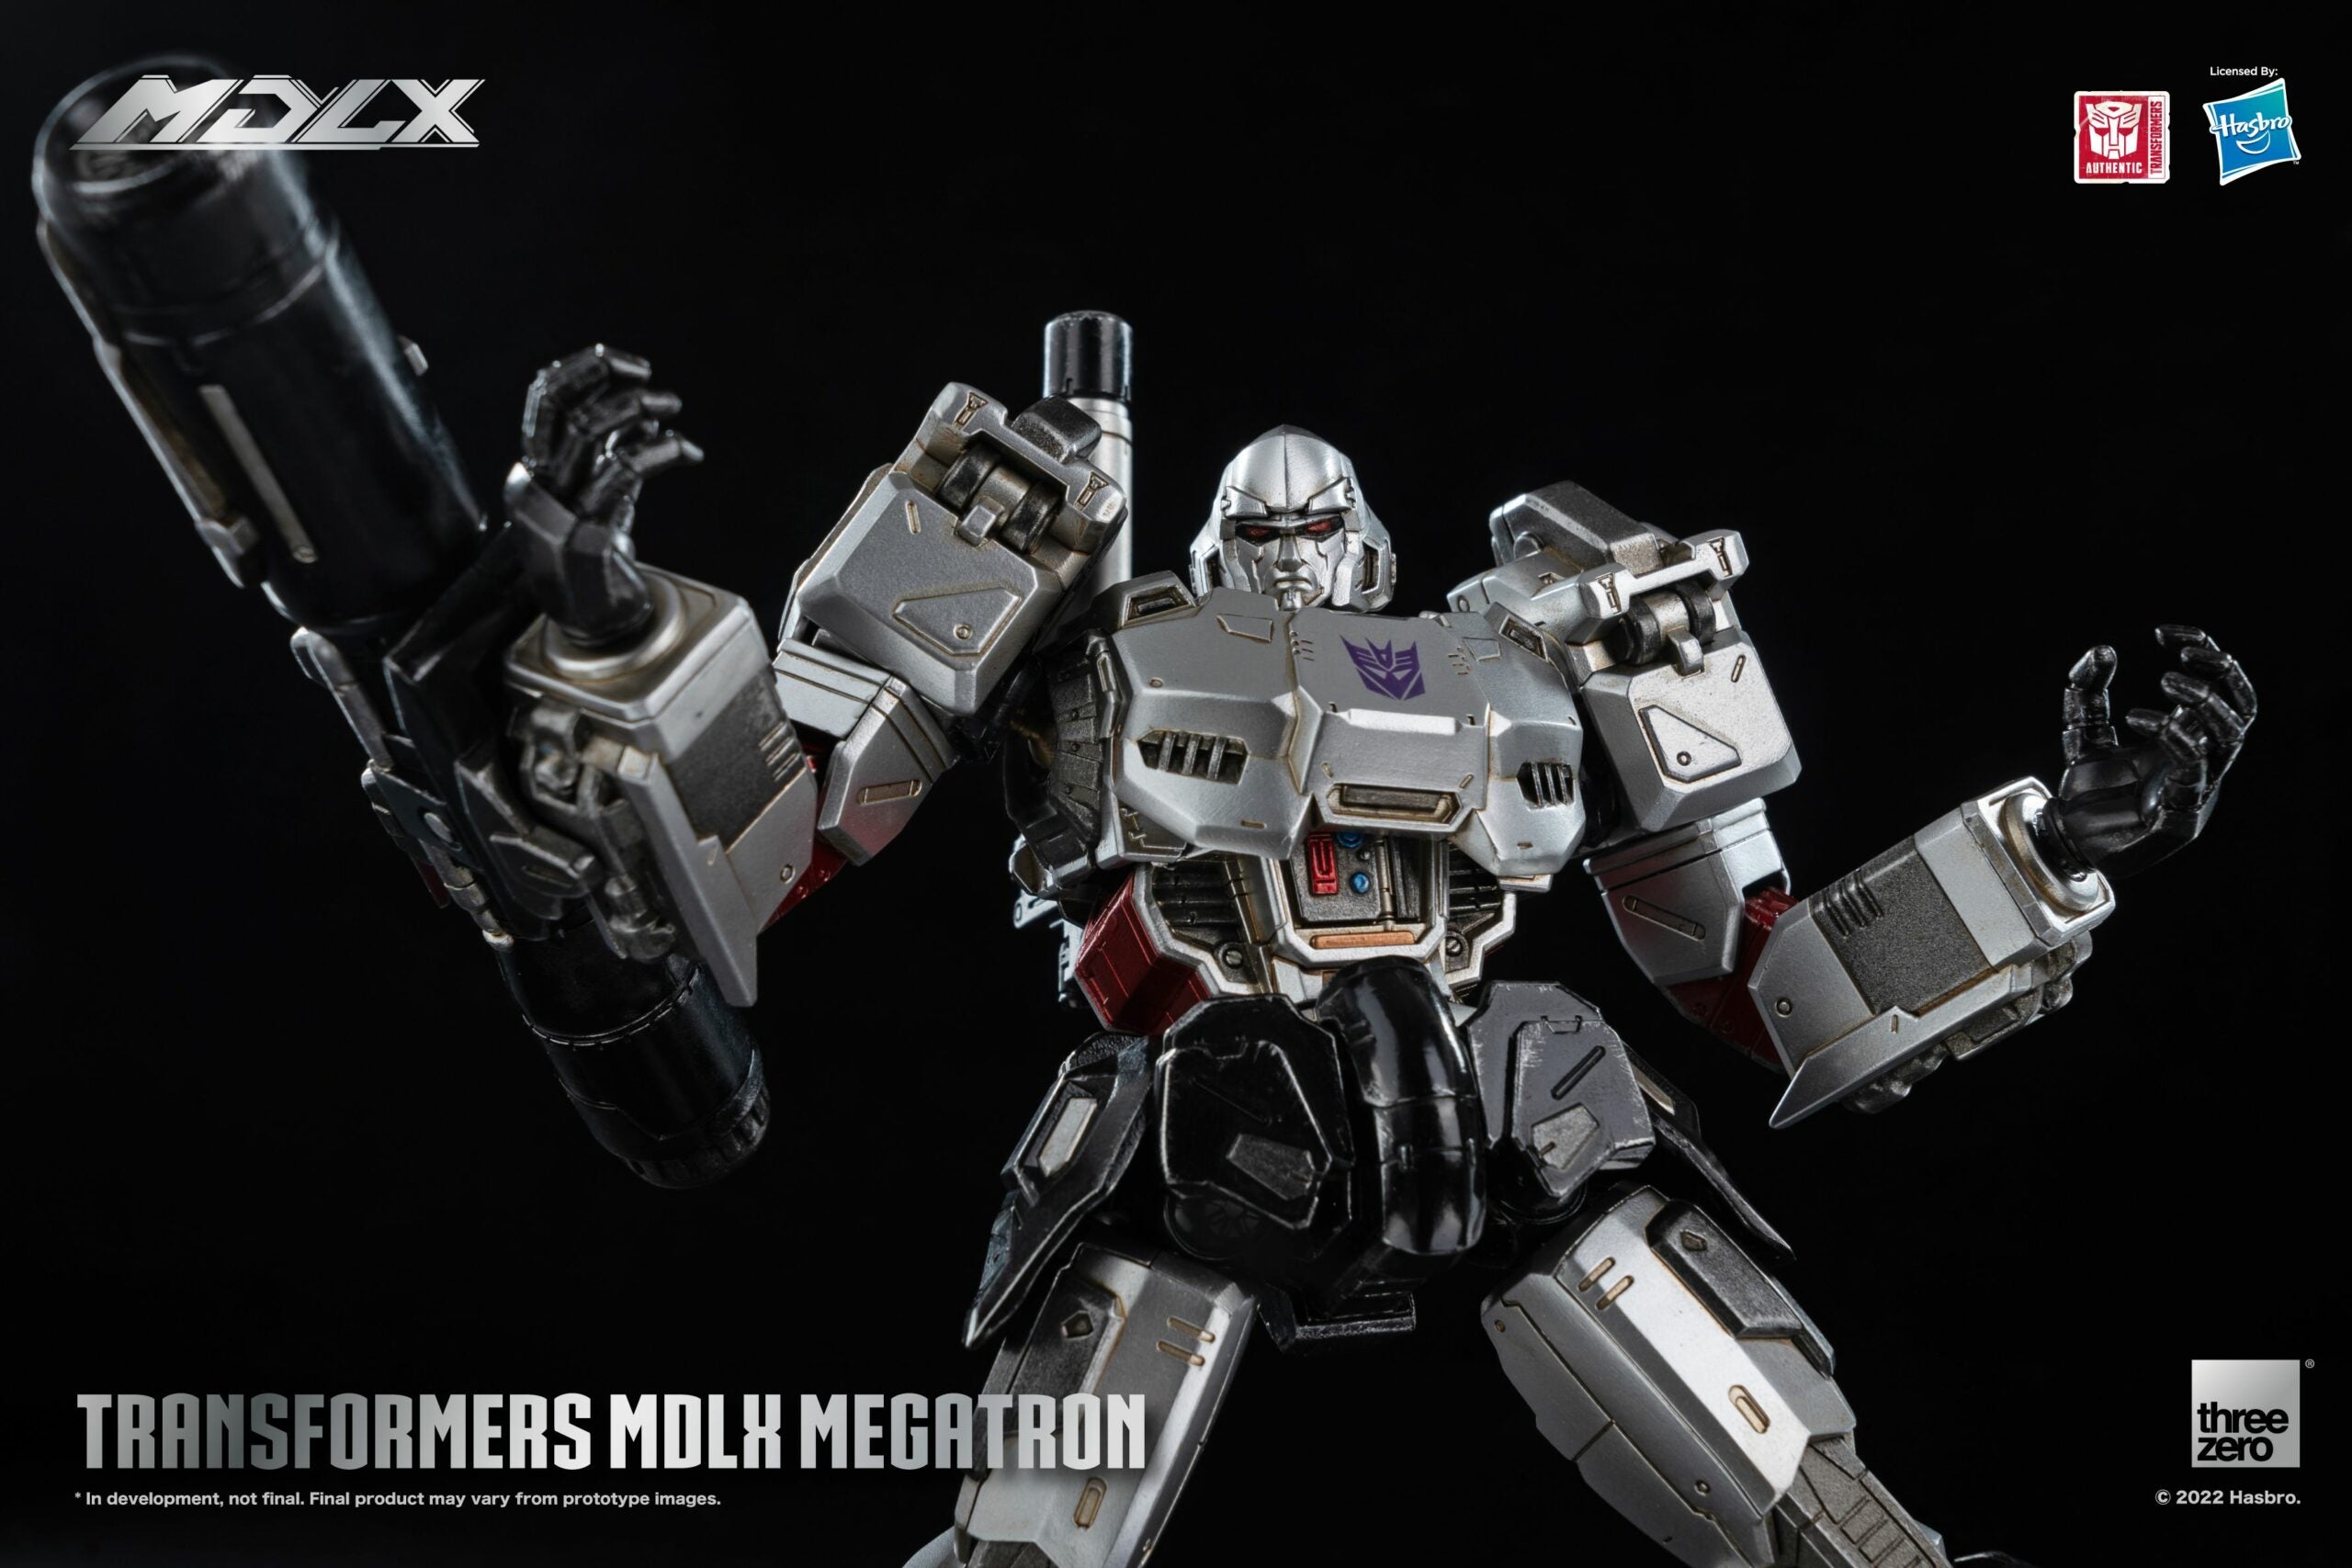 Transformers Threezero MDLX Megatron 7" Articulated Figure